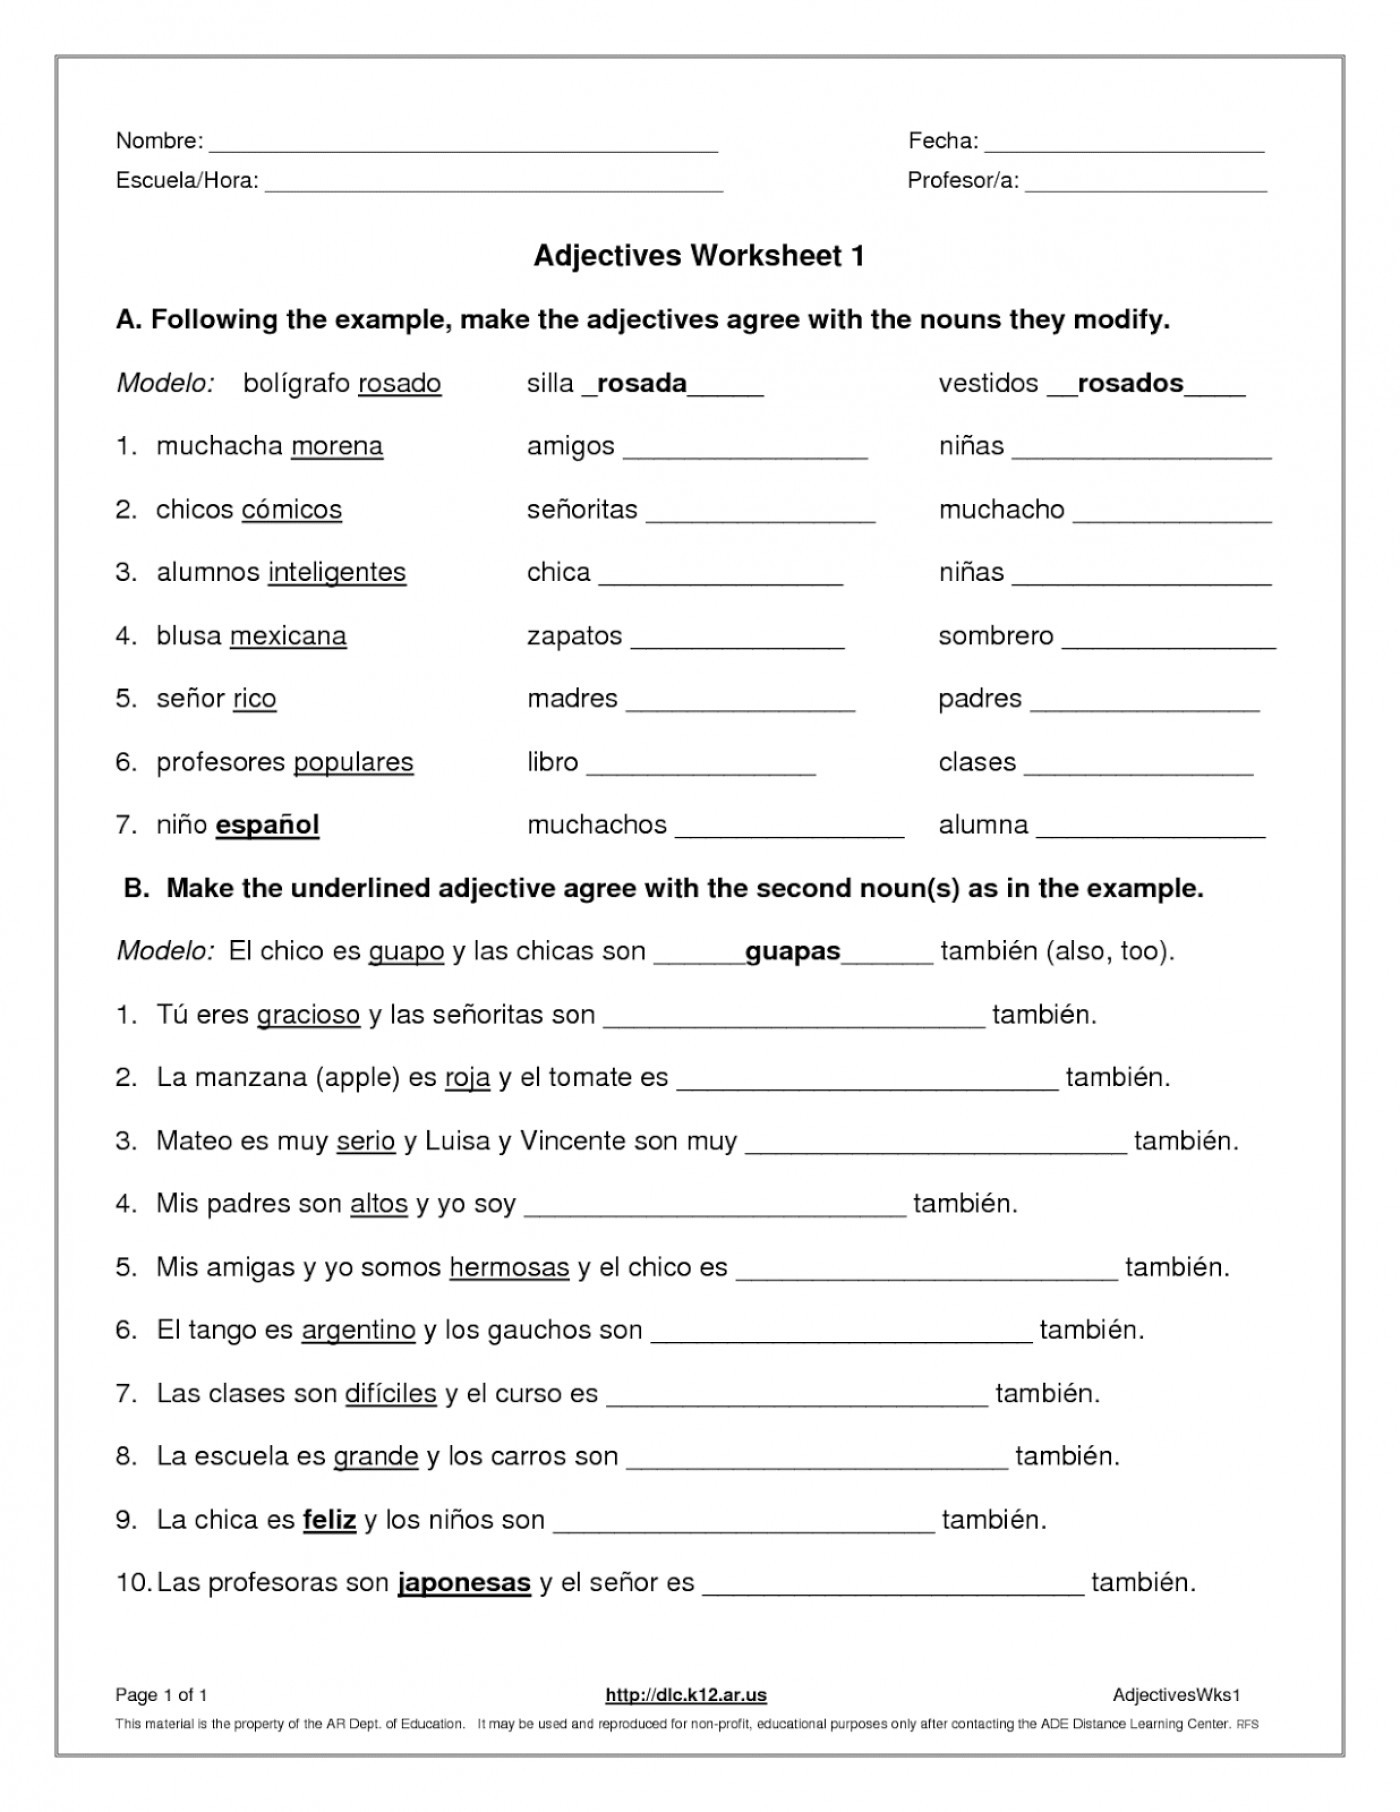 kindergarten-spanish-worksheets-db-excel